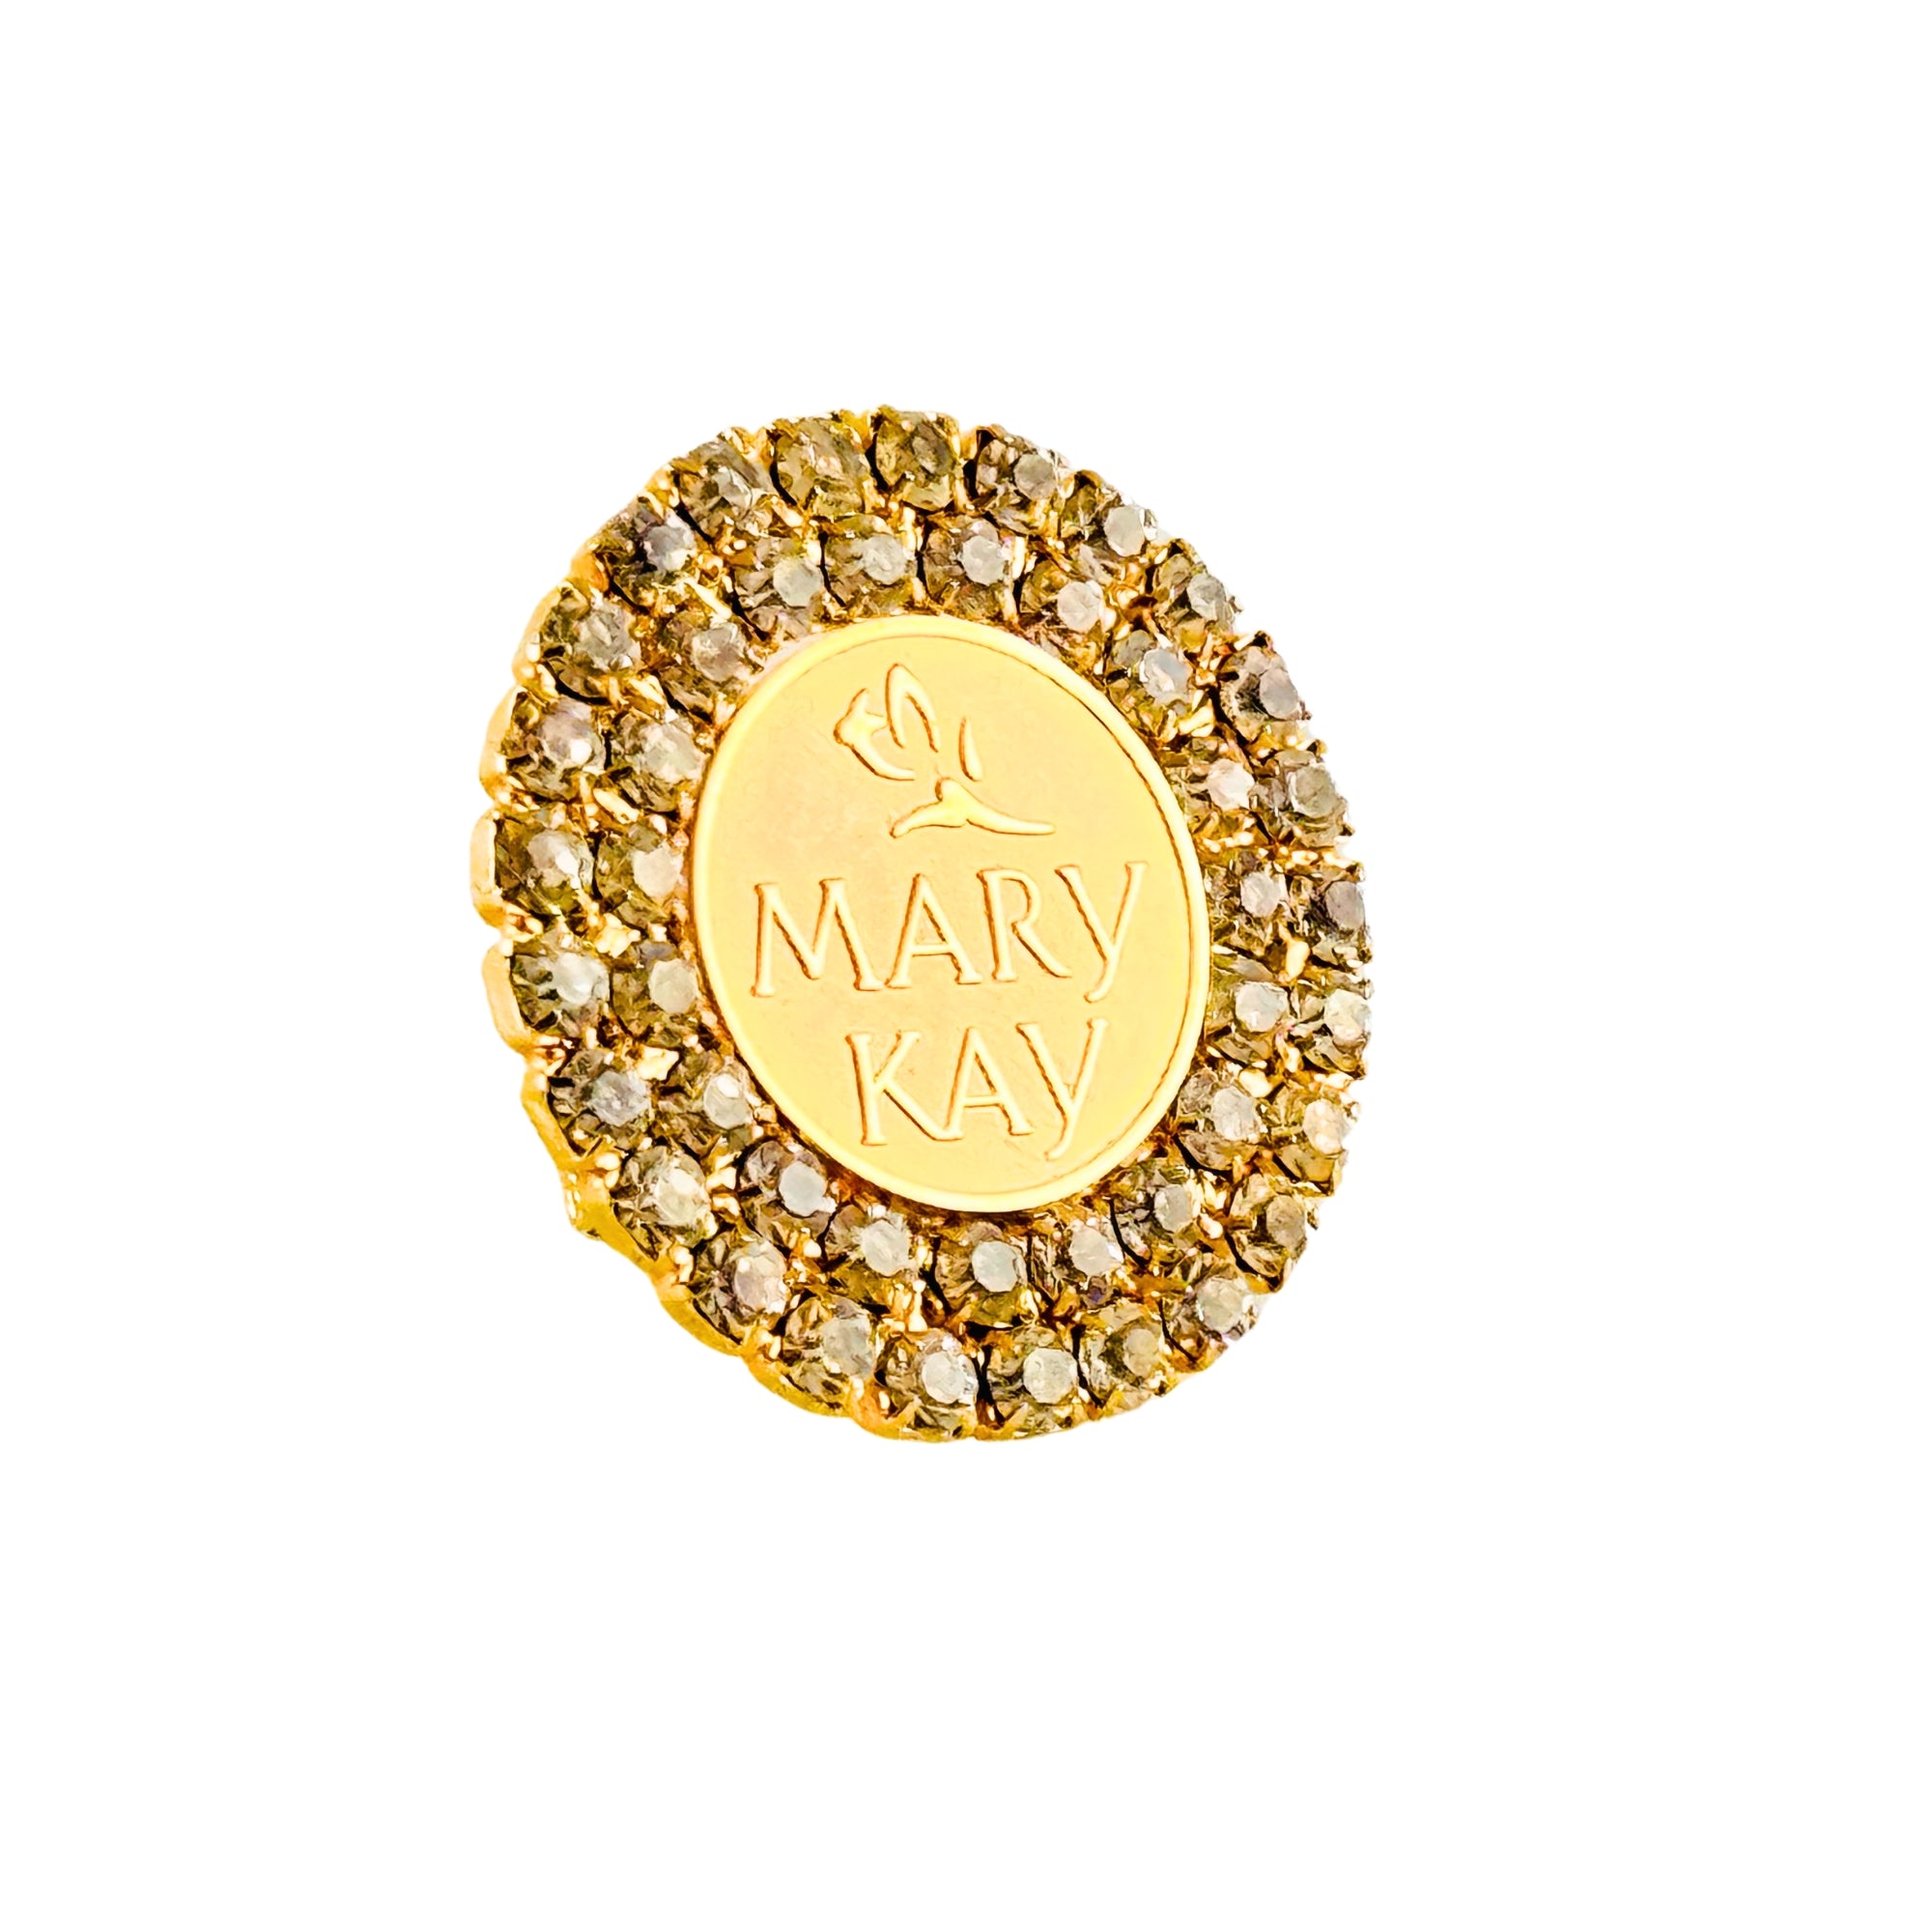 Mary Kay Vintage Rhinestone Gold Disk Adjustable Ring by MizDragonfly